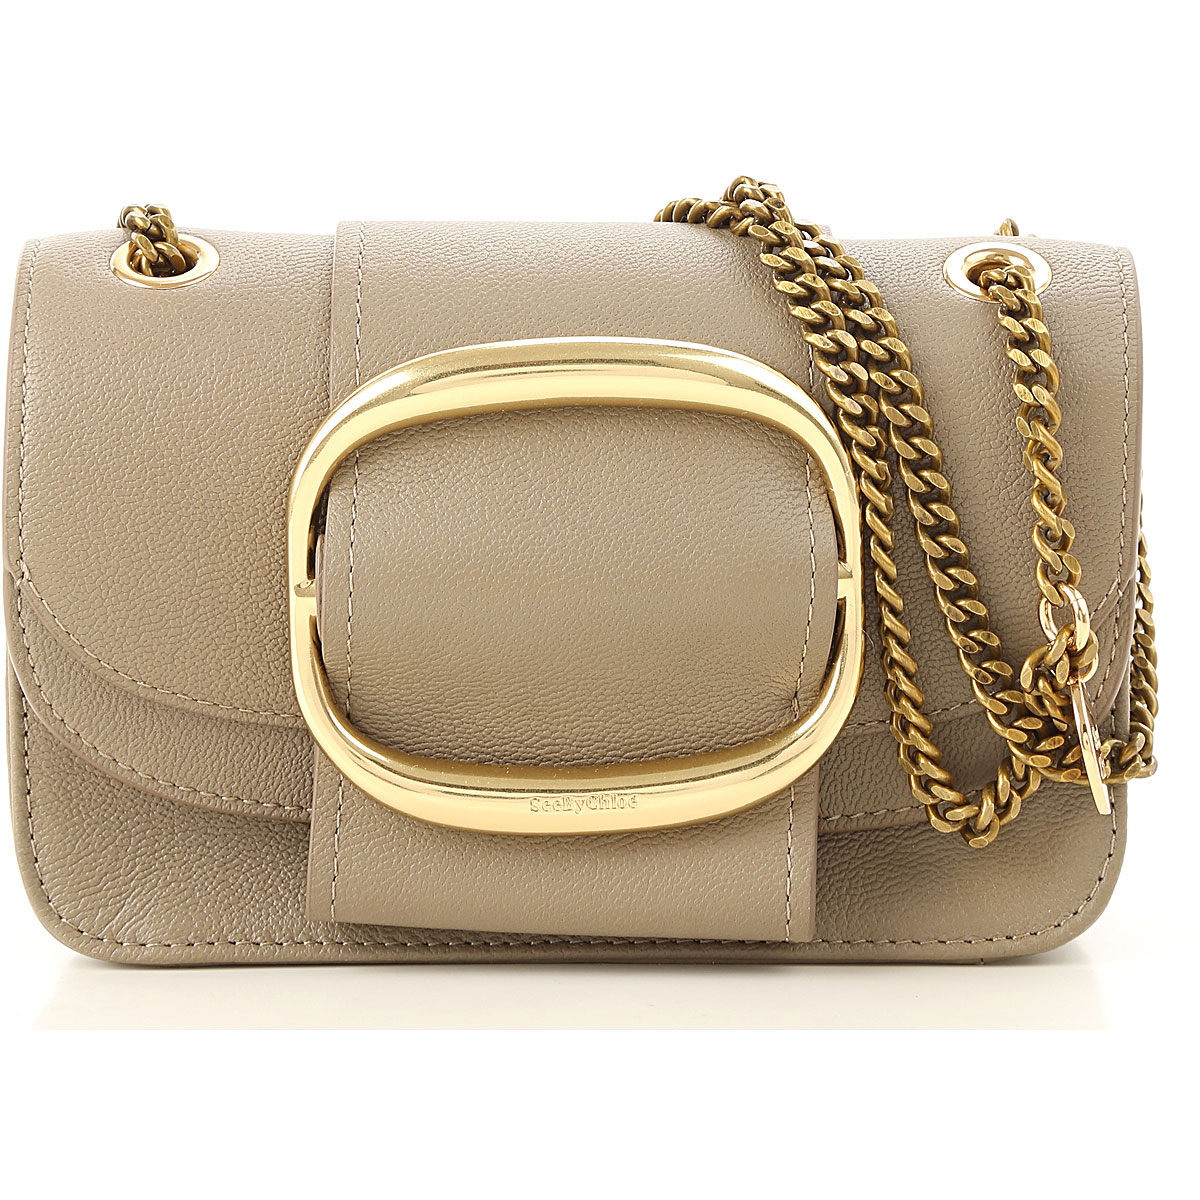 Handbags See By Chloe, Style code: chs19ss99038823w--